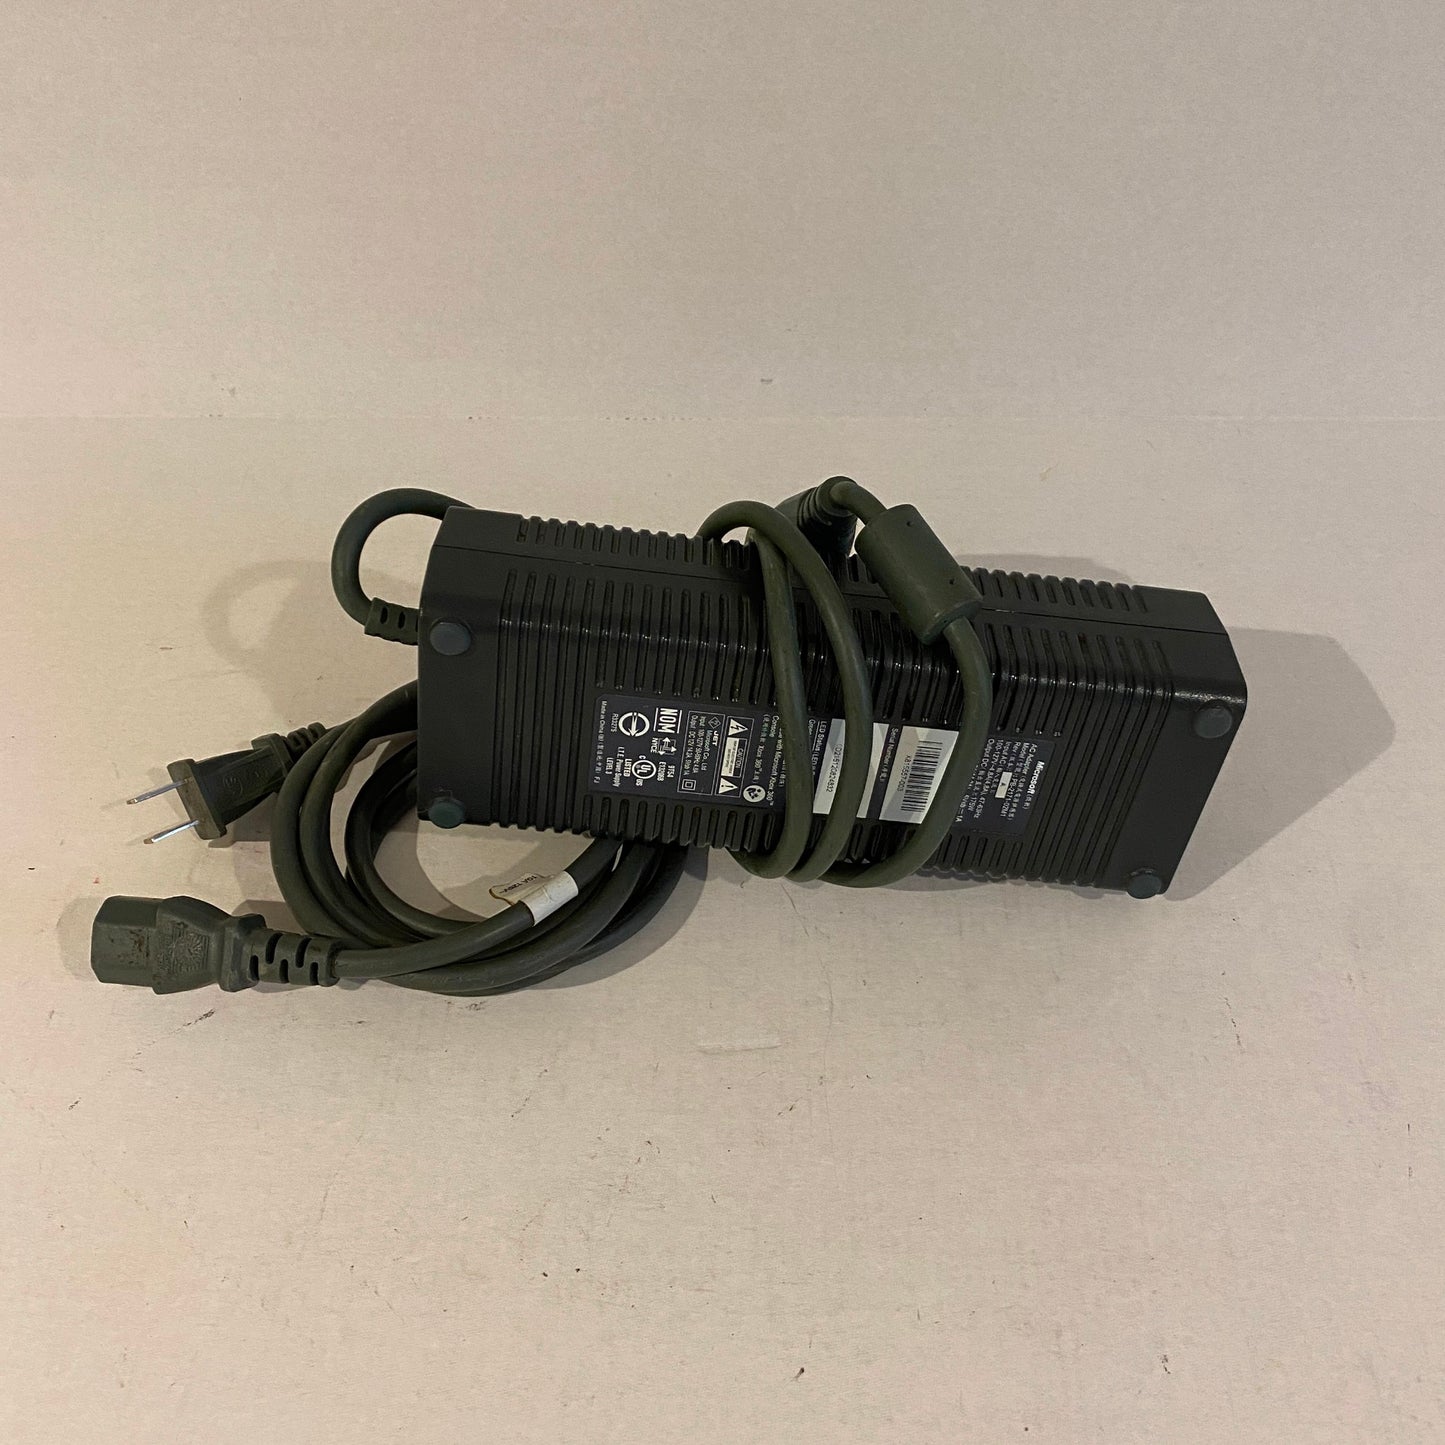 Microsoft Xbox 360 Power Supply Adapter  - PB-2171-02M1